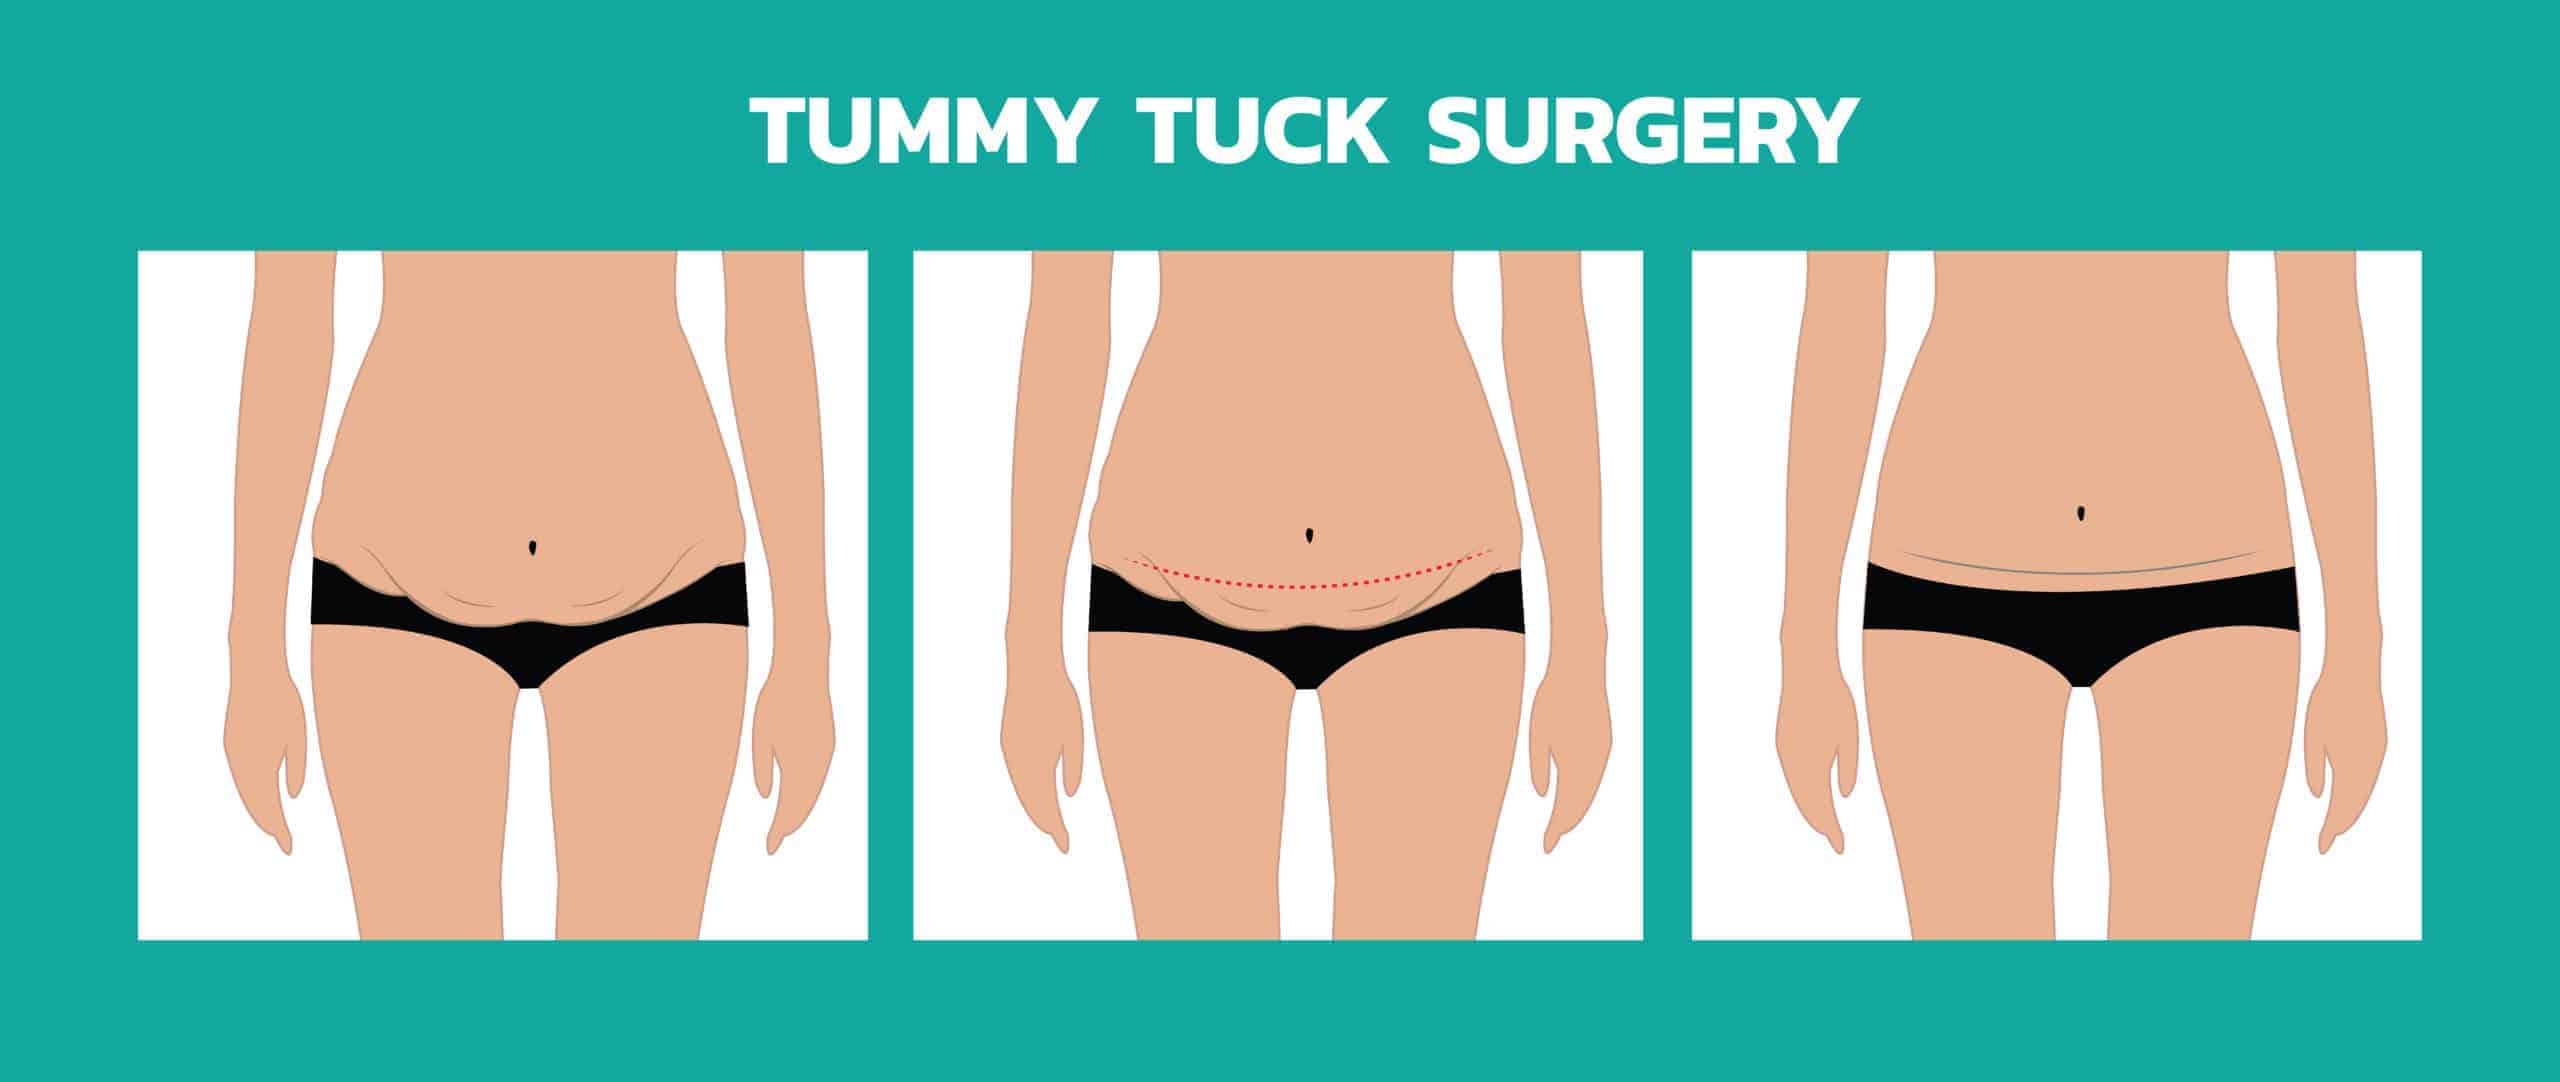 Mini Tummy Tuck vs. Full Tummy Tuck